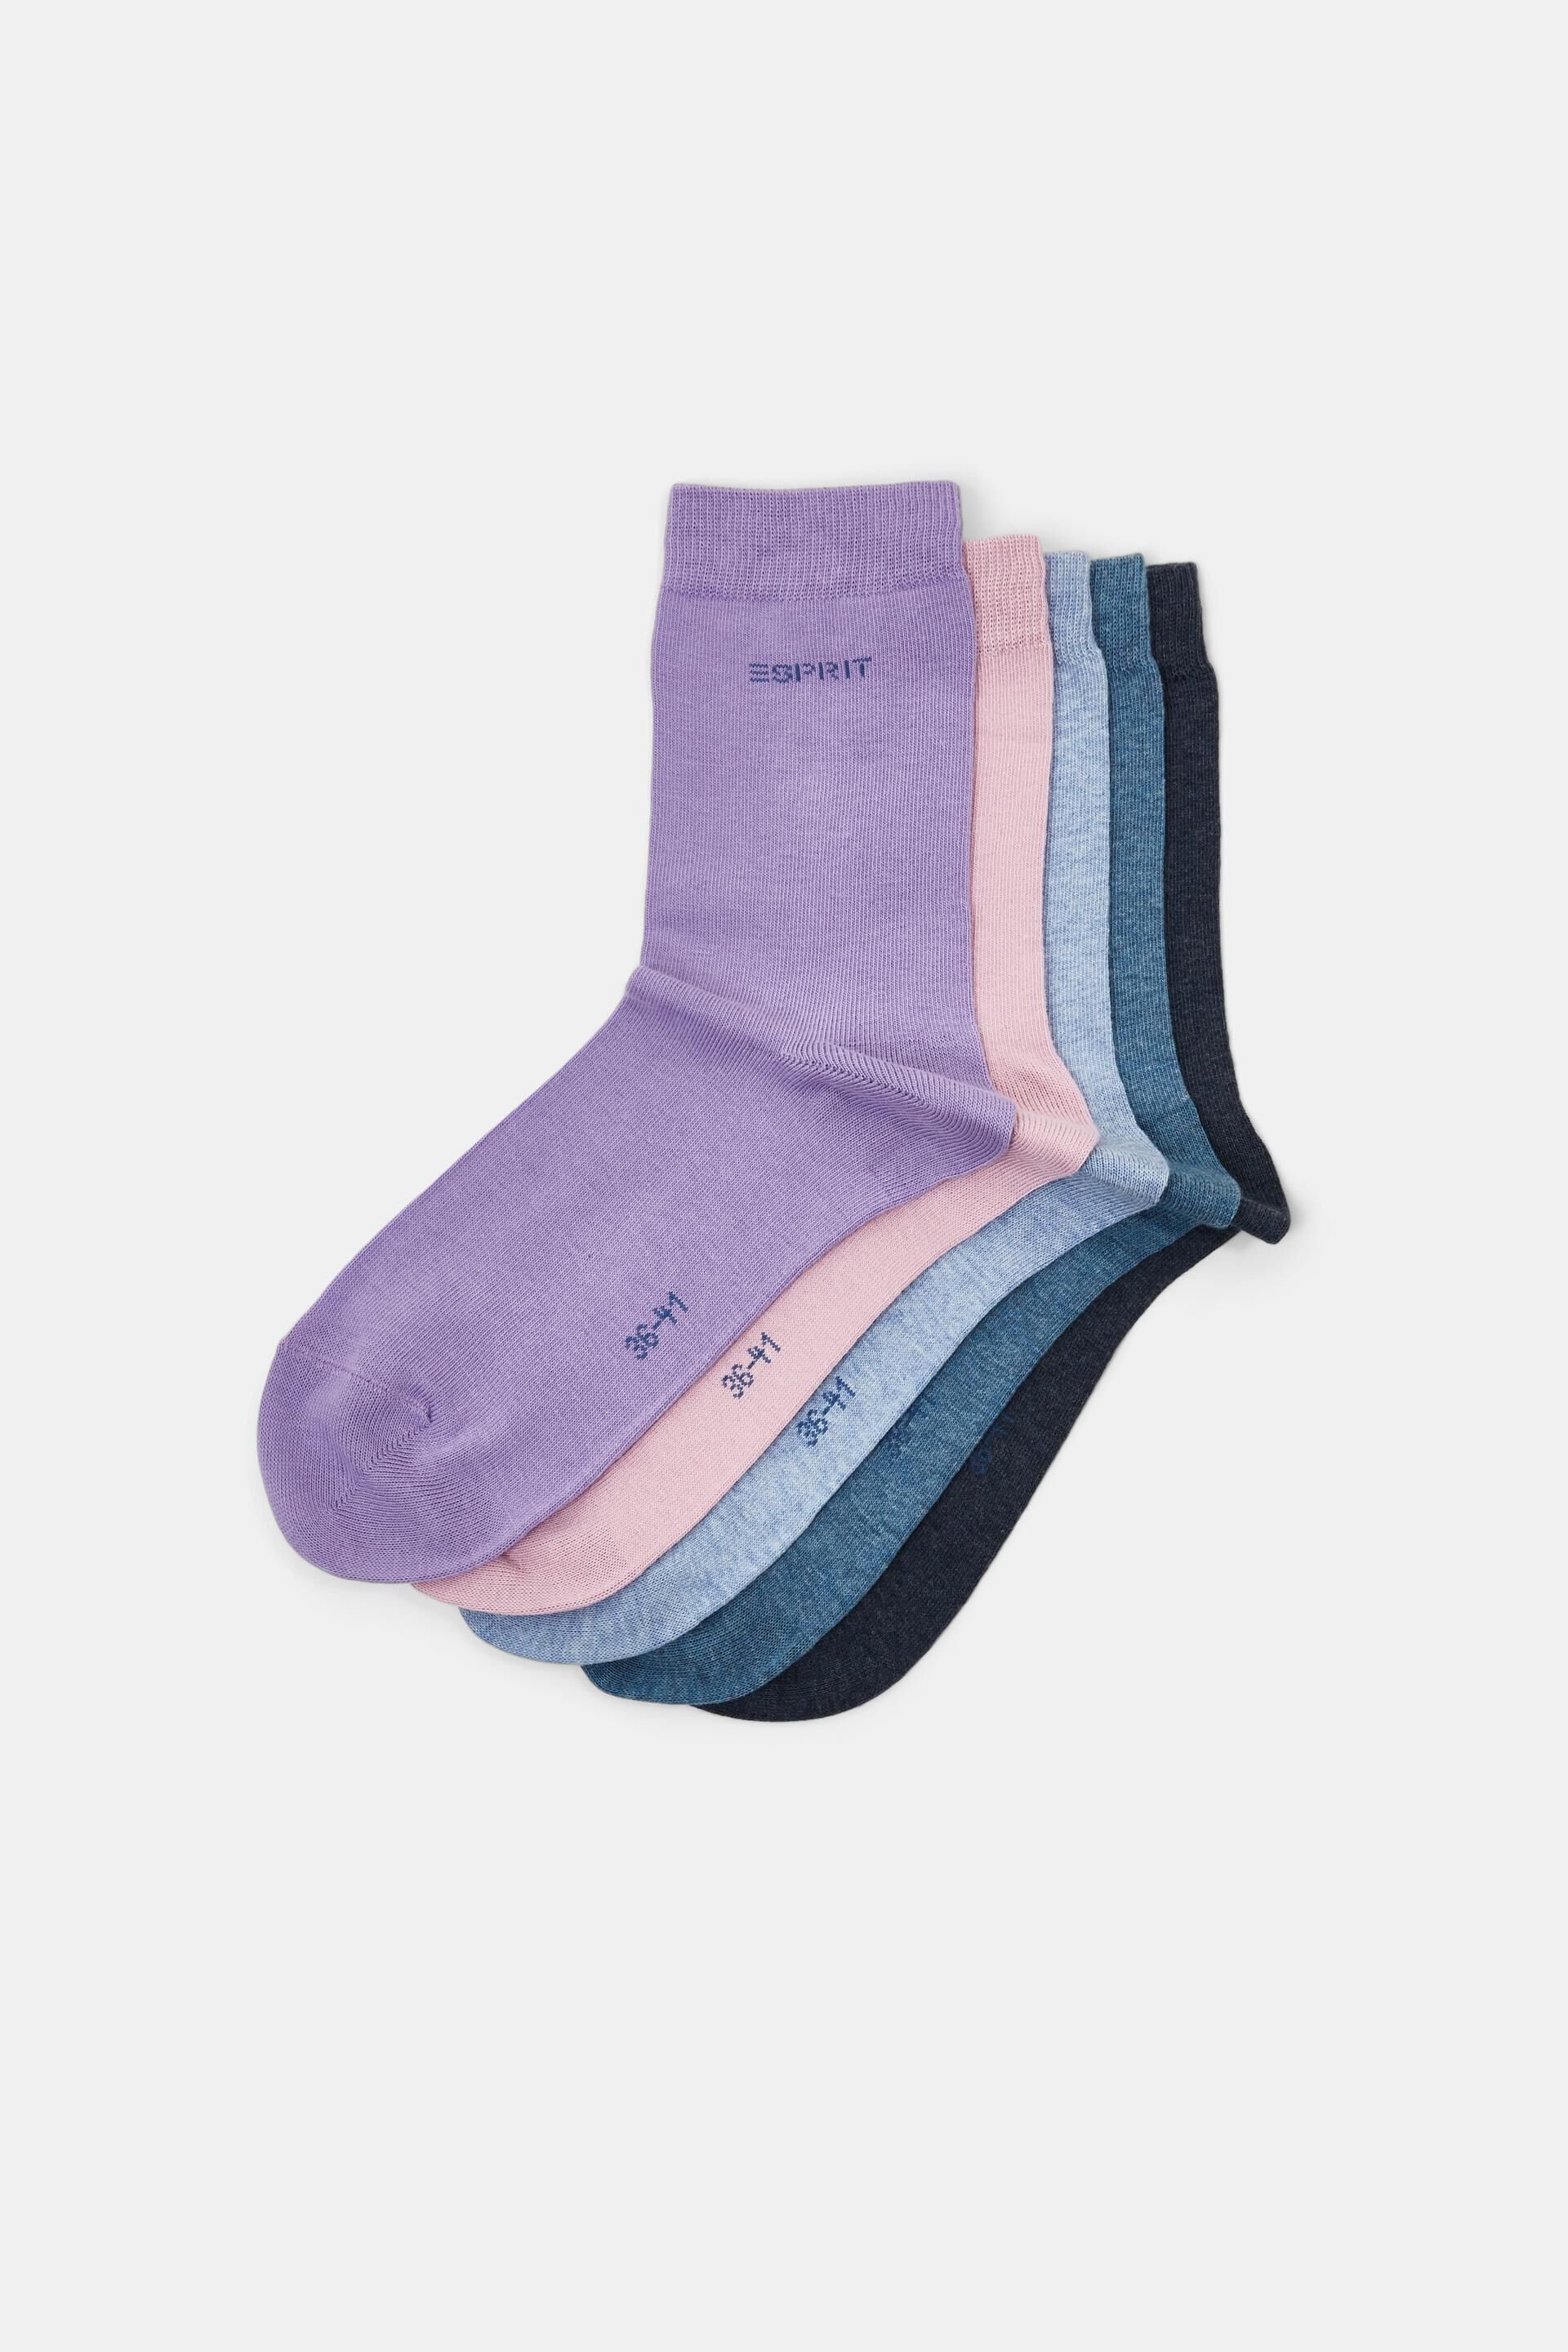 Esprit organic socks, cotton 5-pack of